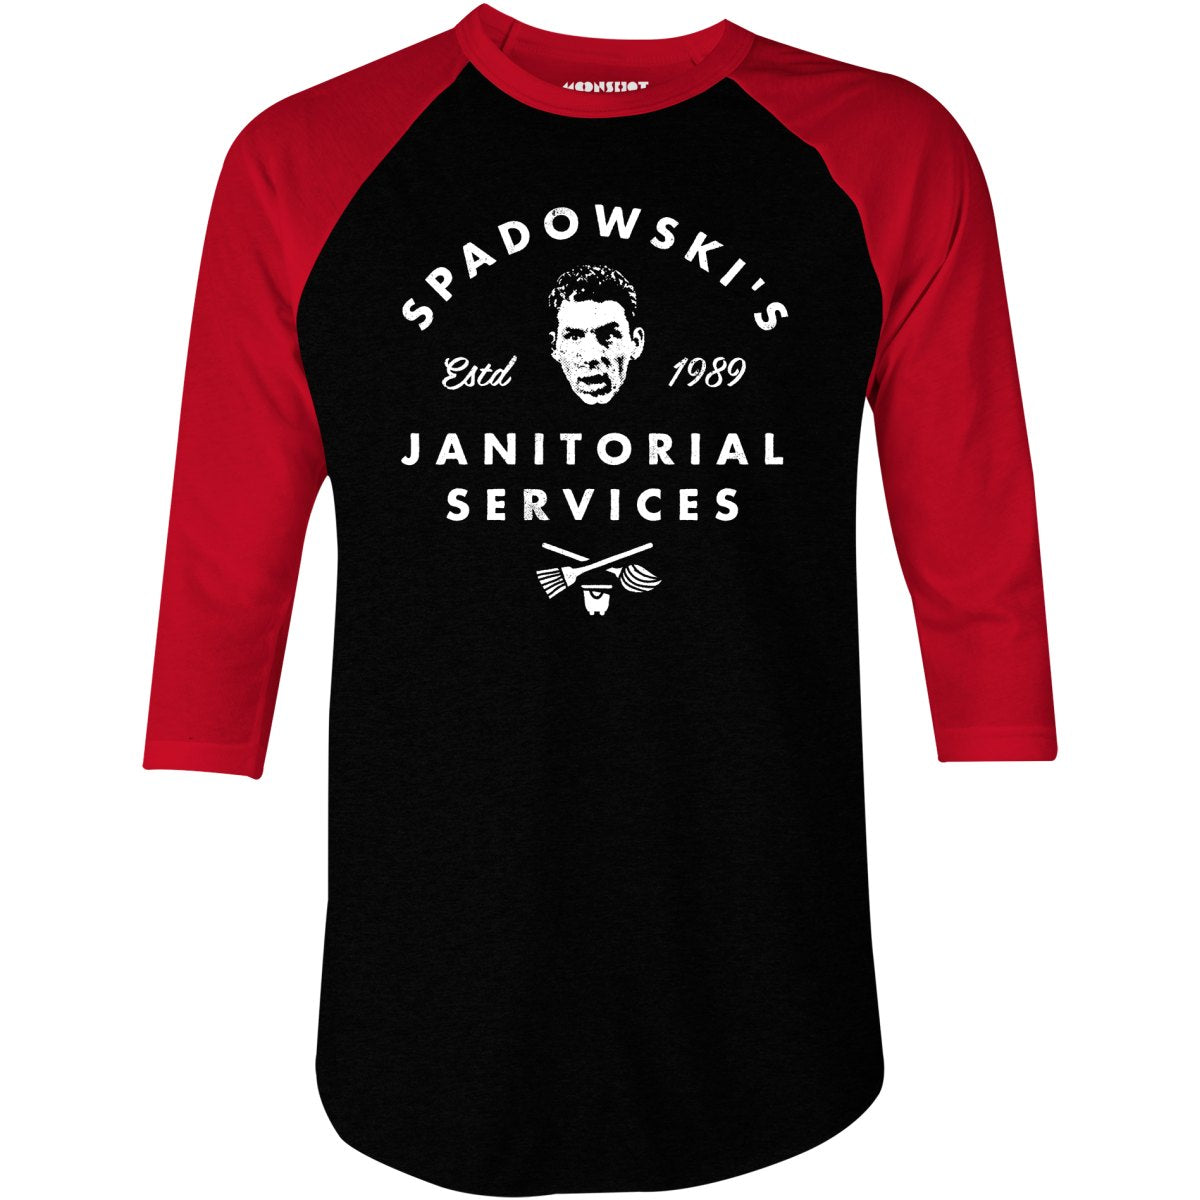 UHF Spadowski's Janitorial Services - 3/4 Sleeve Raglan T-Shirt